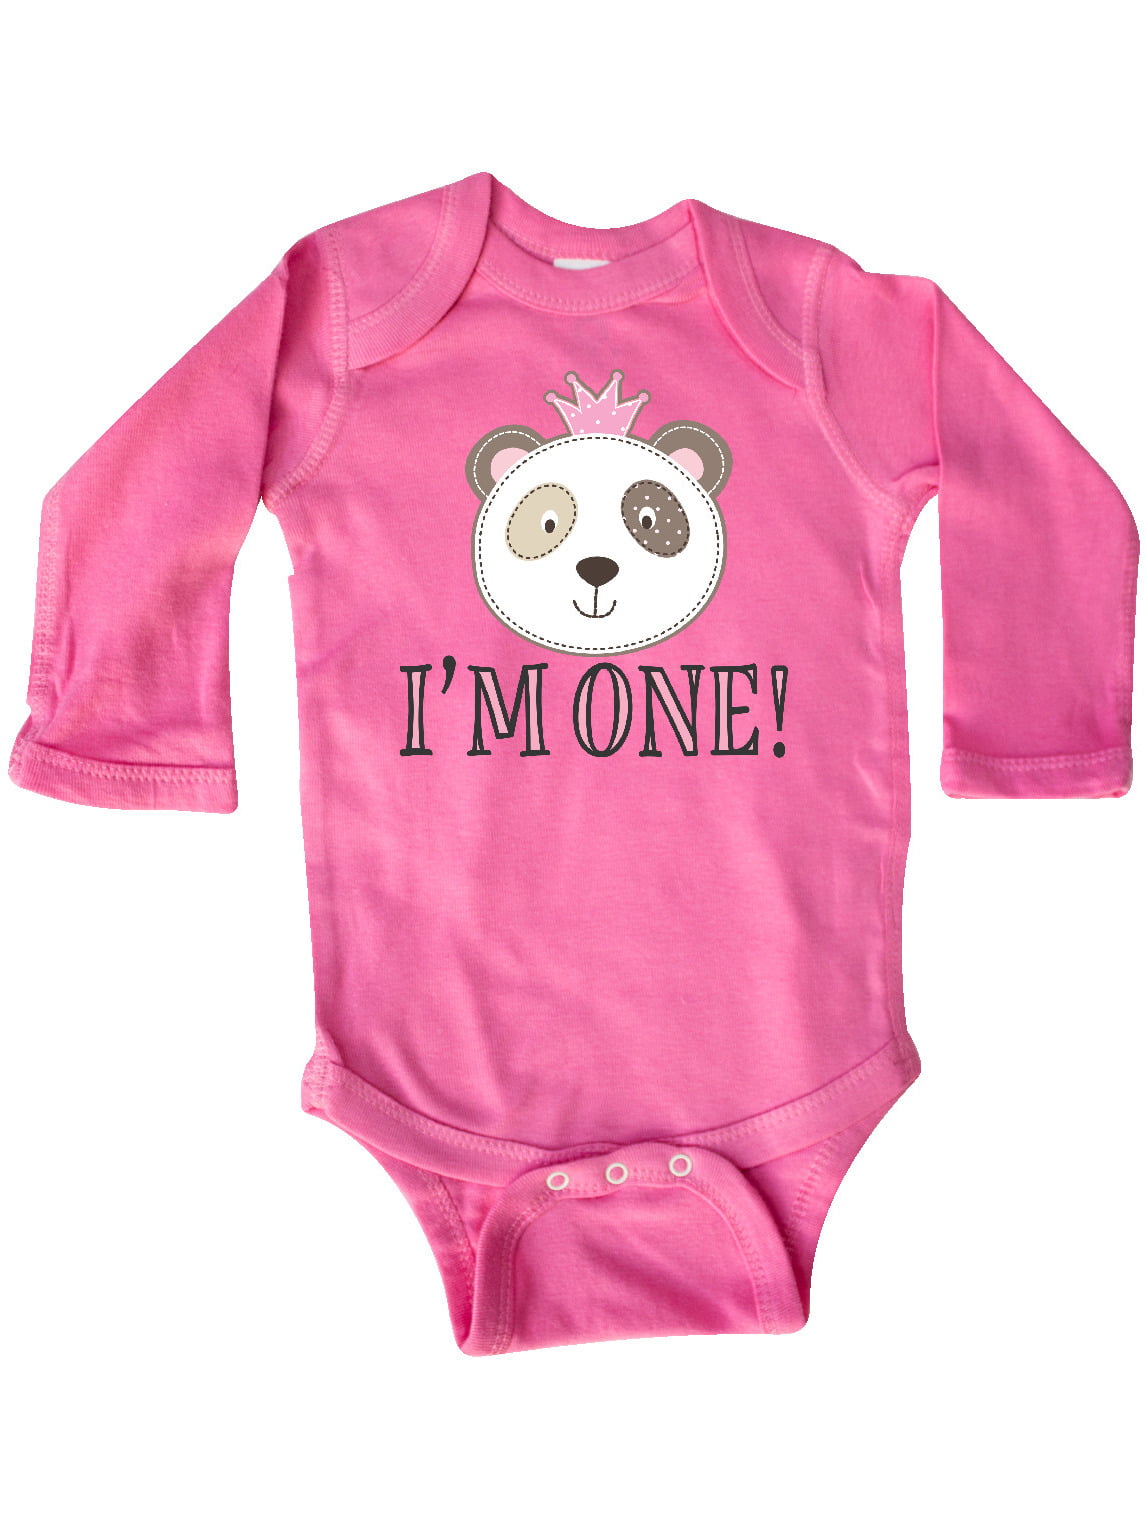 Baby Boy Girl Black Long Sleeve Shirt Bodysuit Turtleneck Romper Winter Clothes Toddler Fall Pajama Layer Top